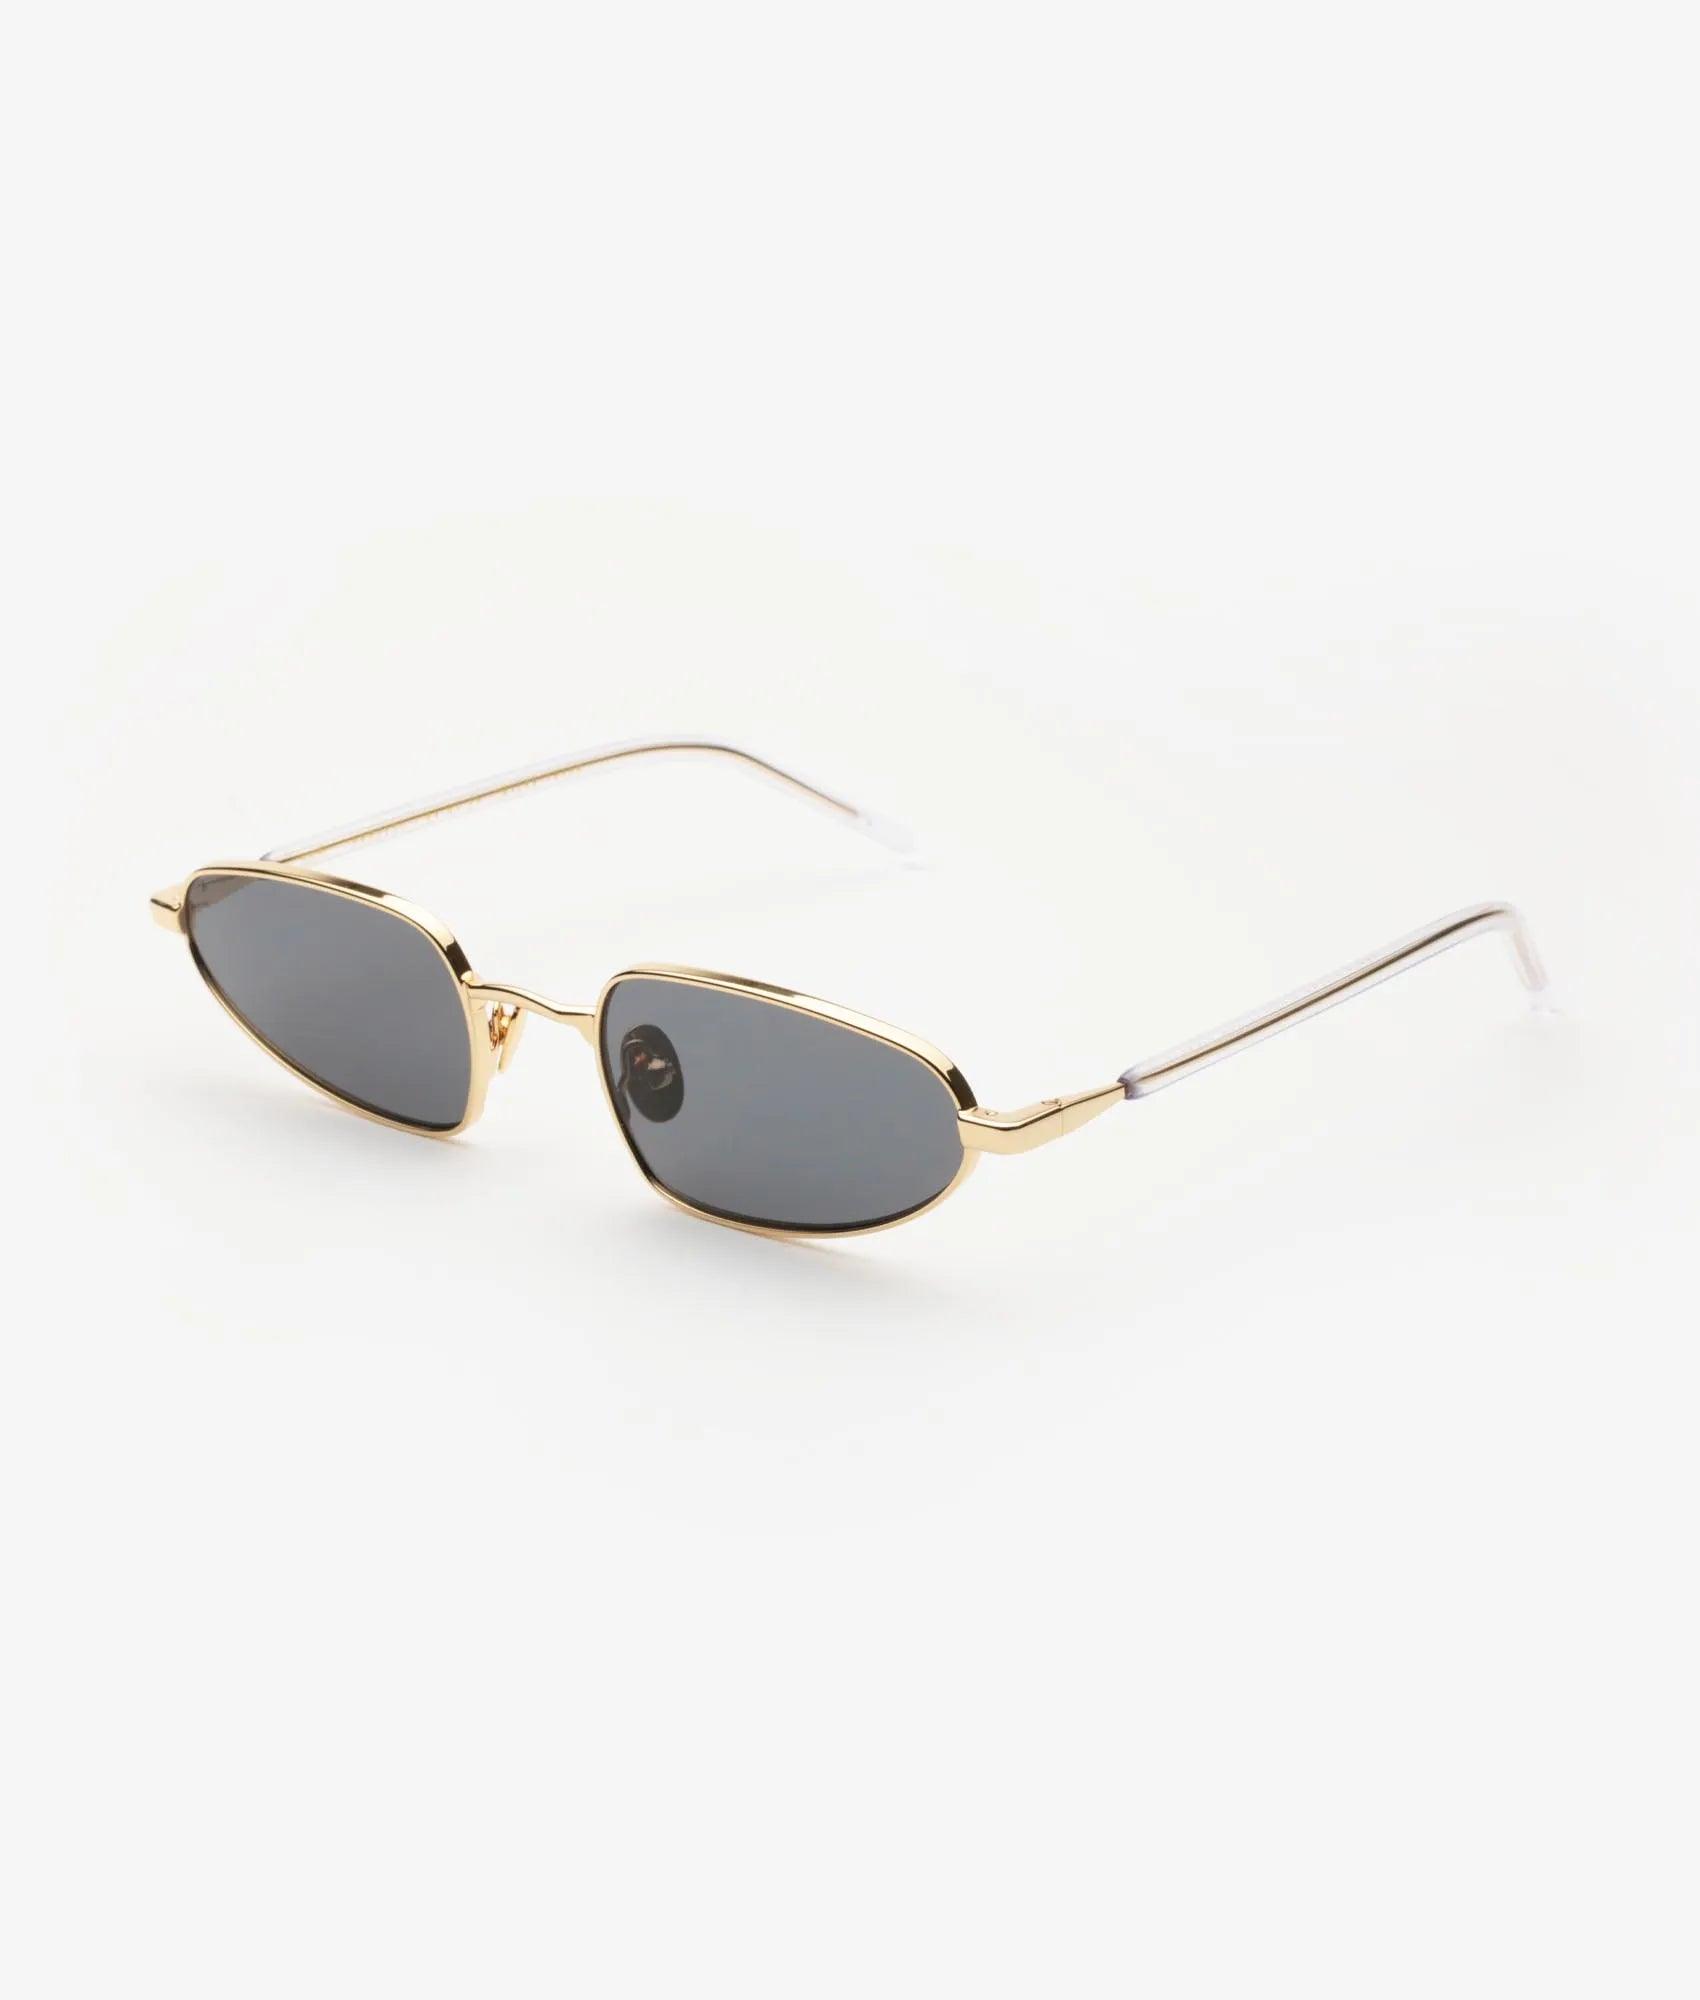 Gast Farfa - Gold - One size - Sunglasses